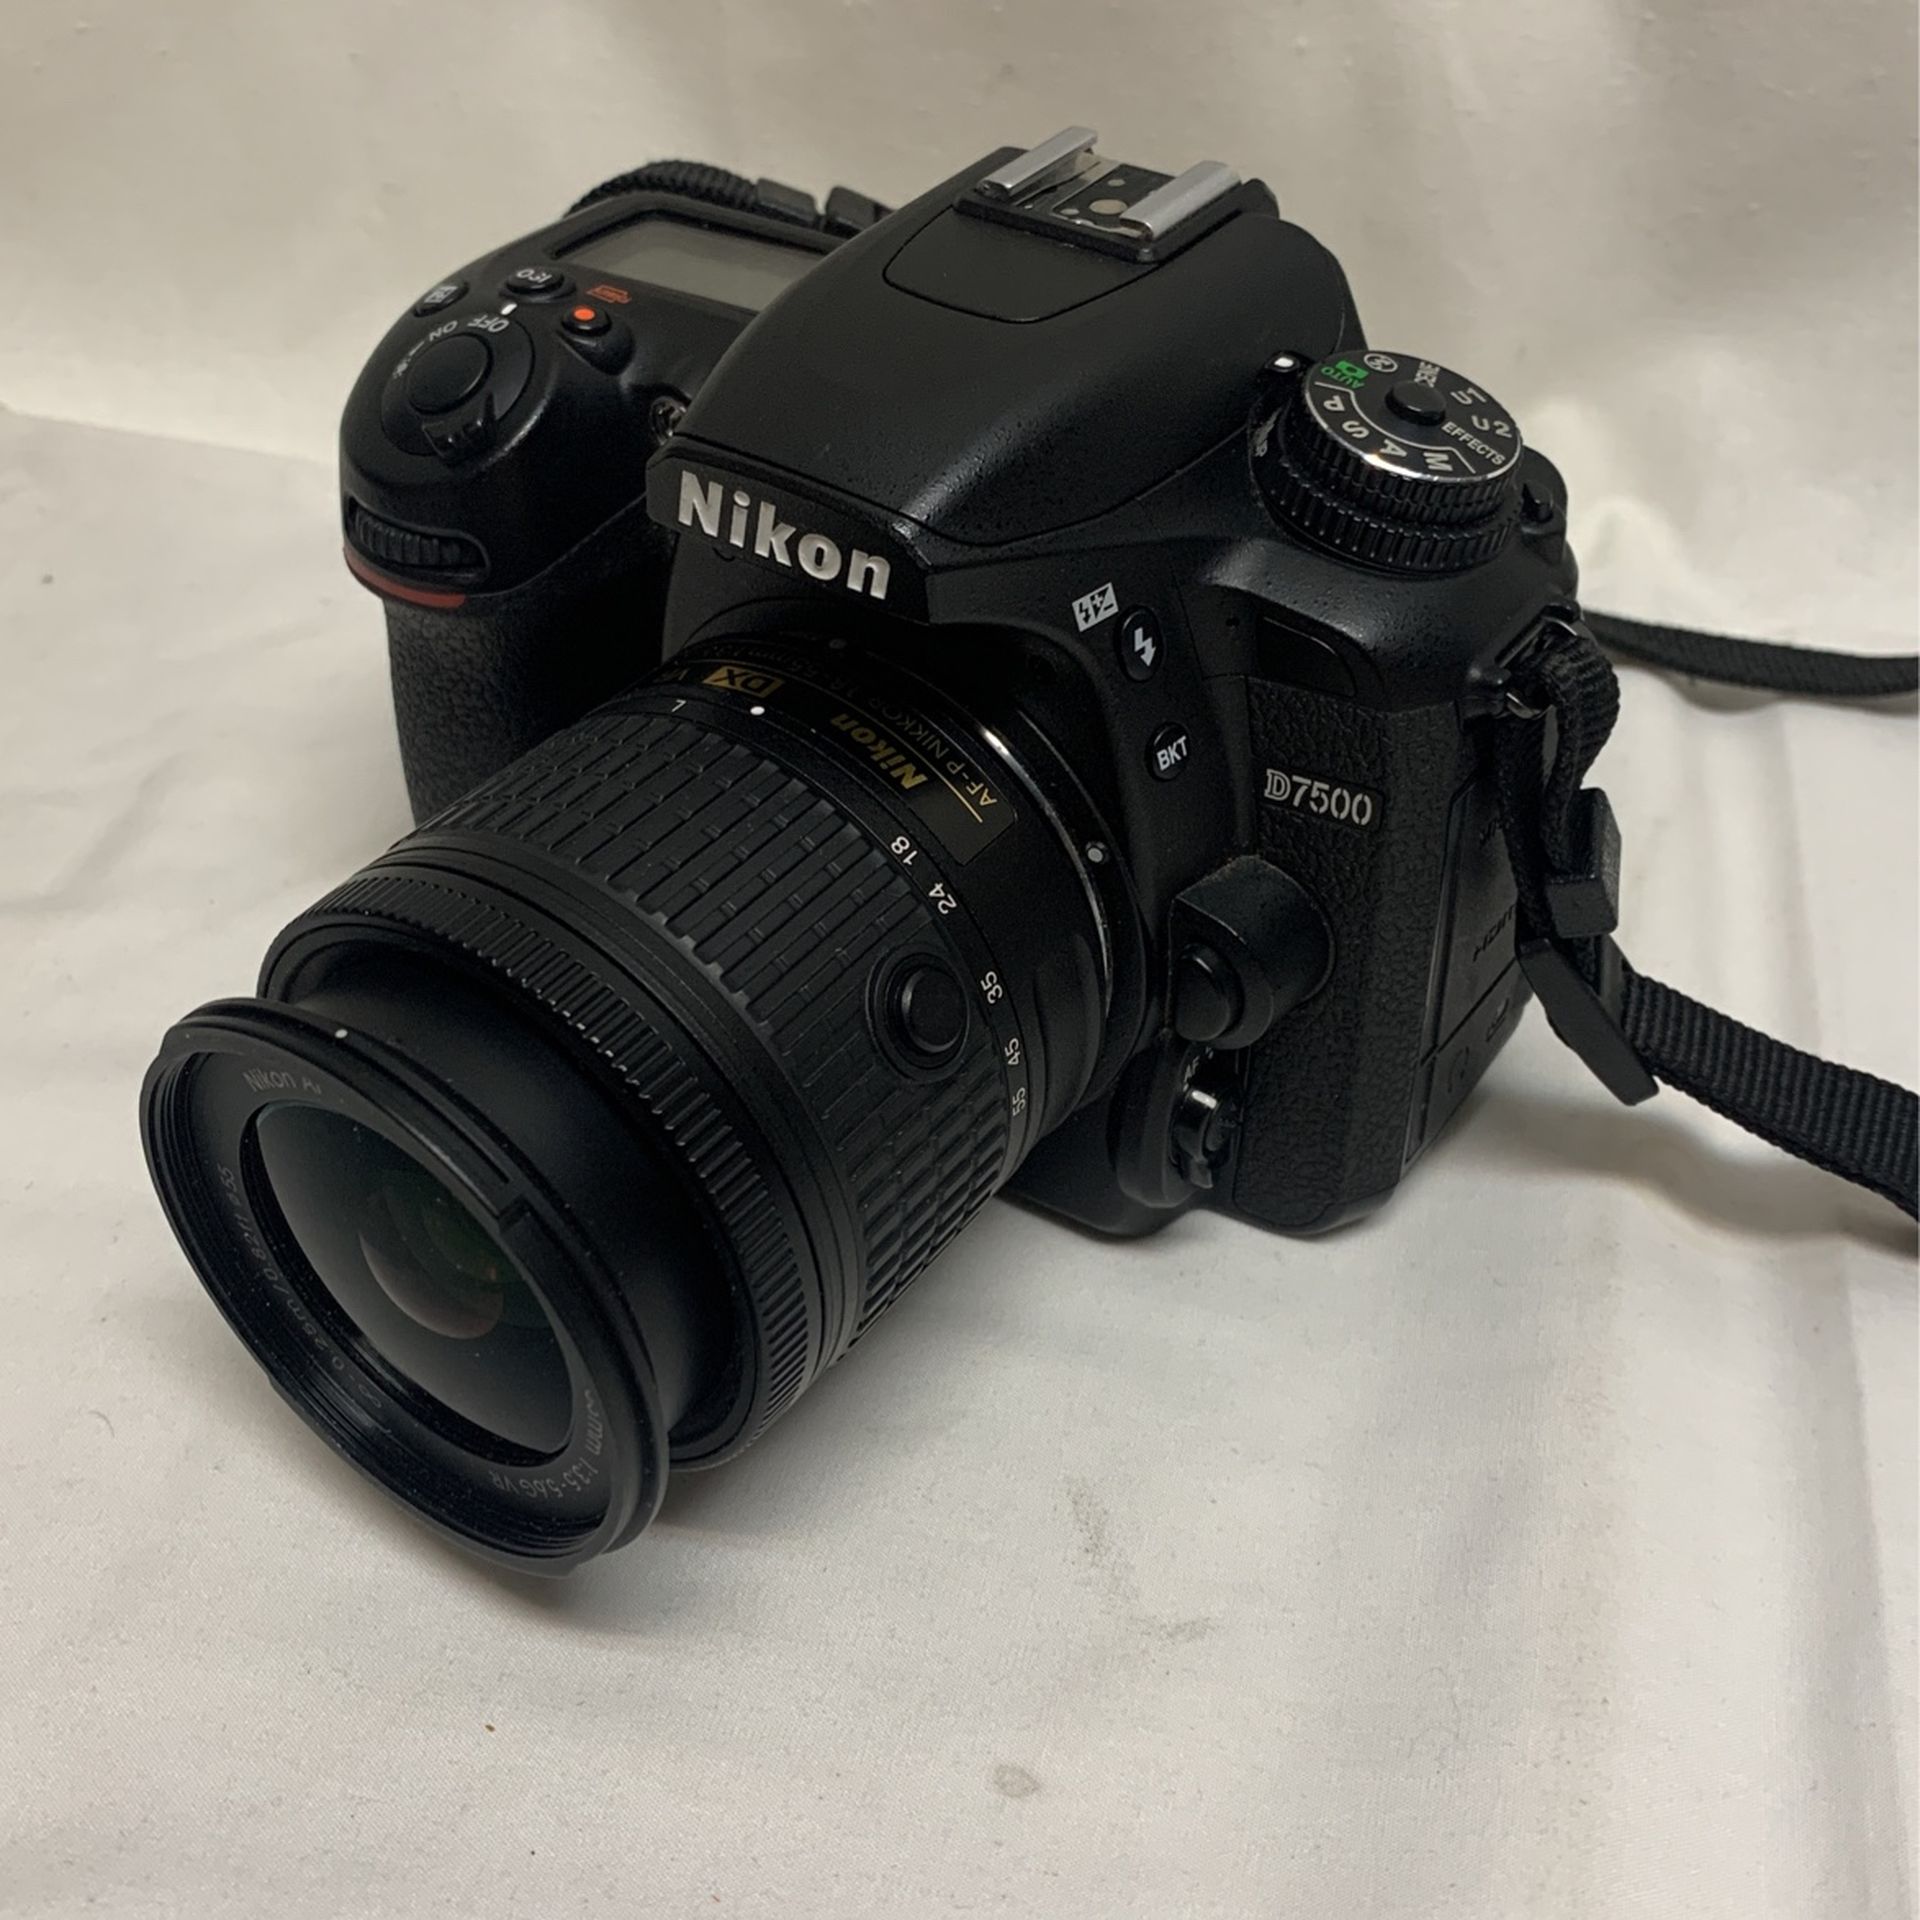 Nikon D7500 With 18-55 mm Lens  $800